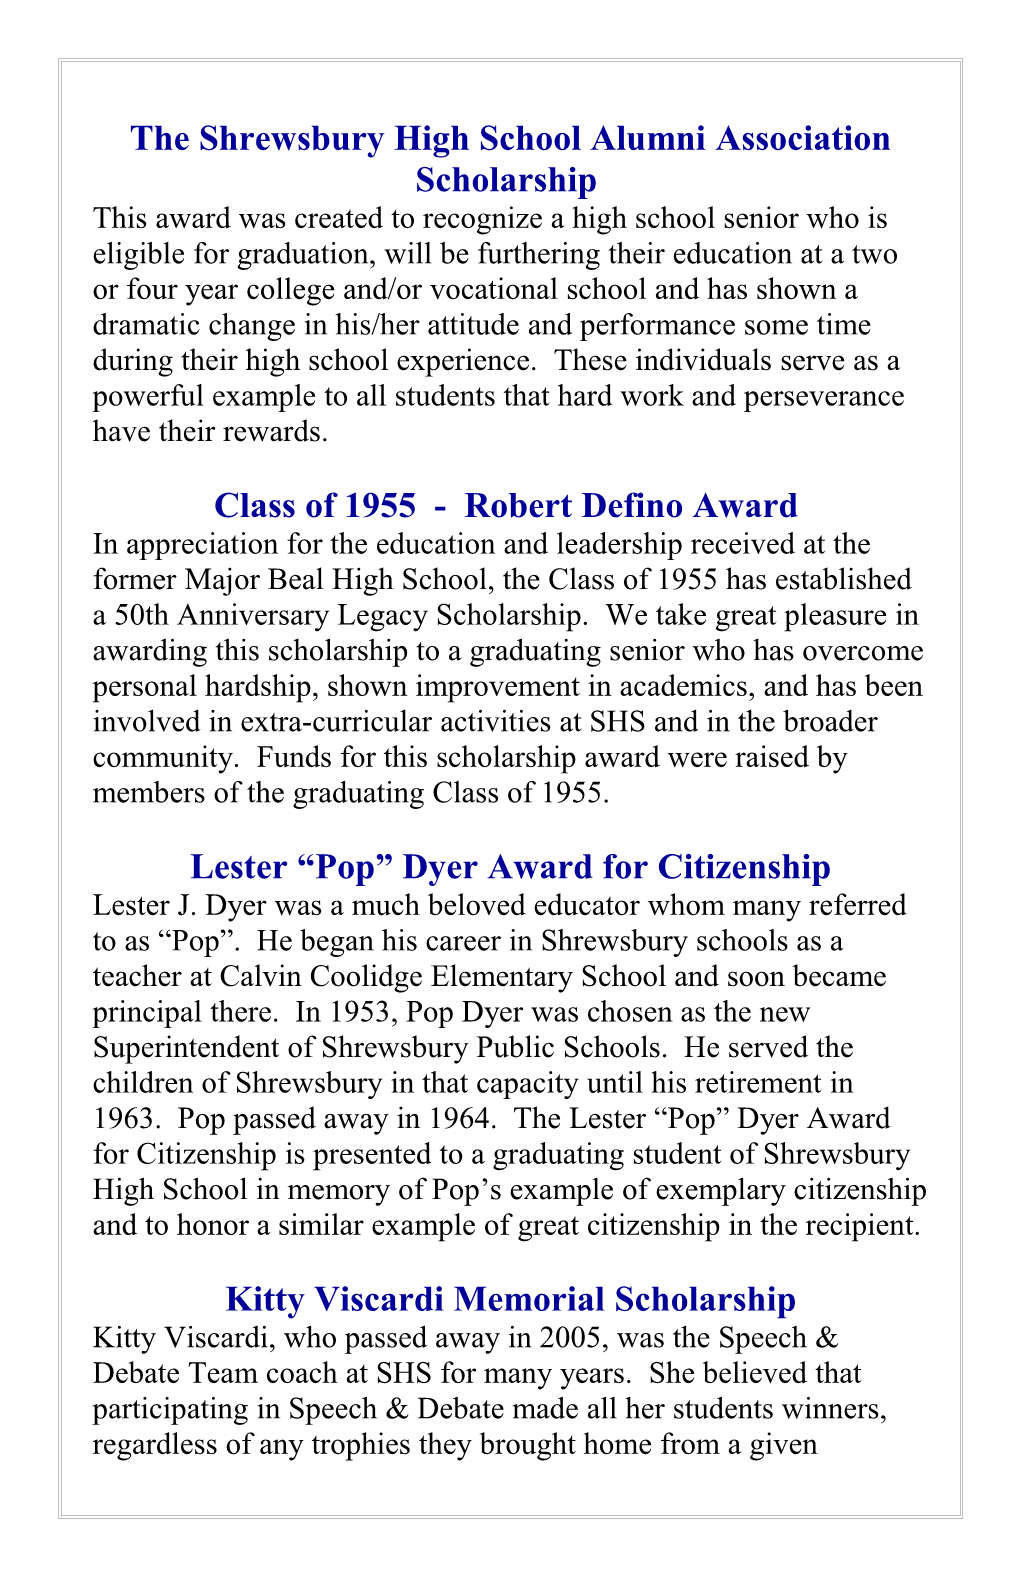 The Shrewsbury High School Alumni Association Scholarship